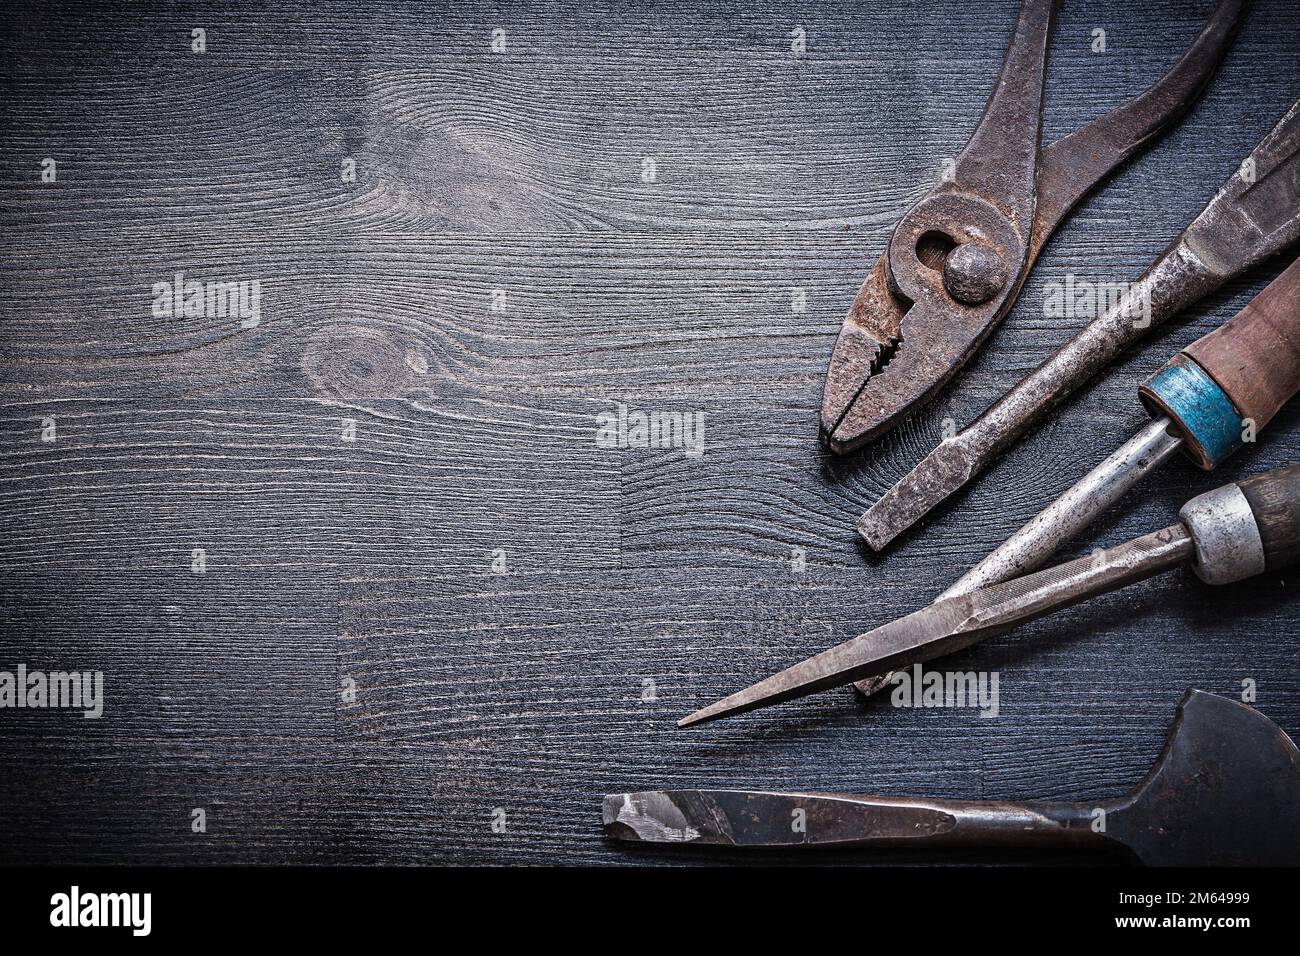 vintage cold chisel rasp screwdriver pliers. Stock Photo